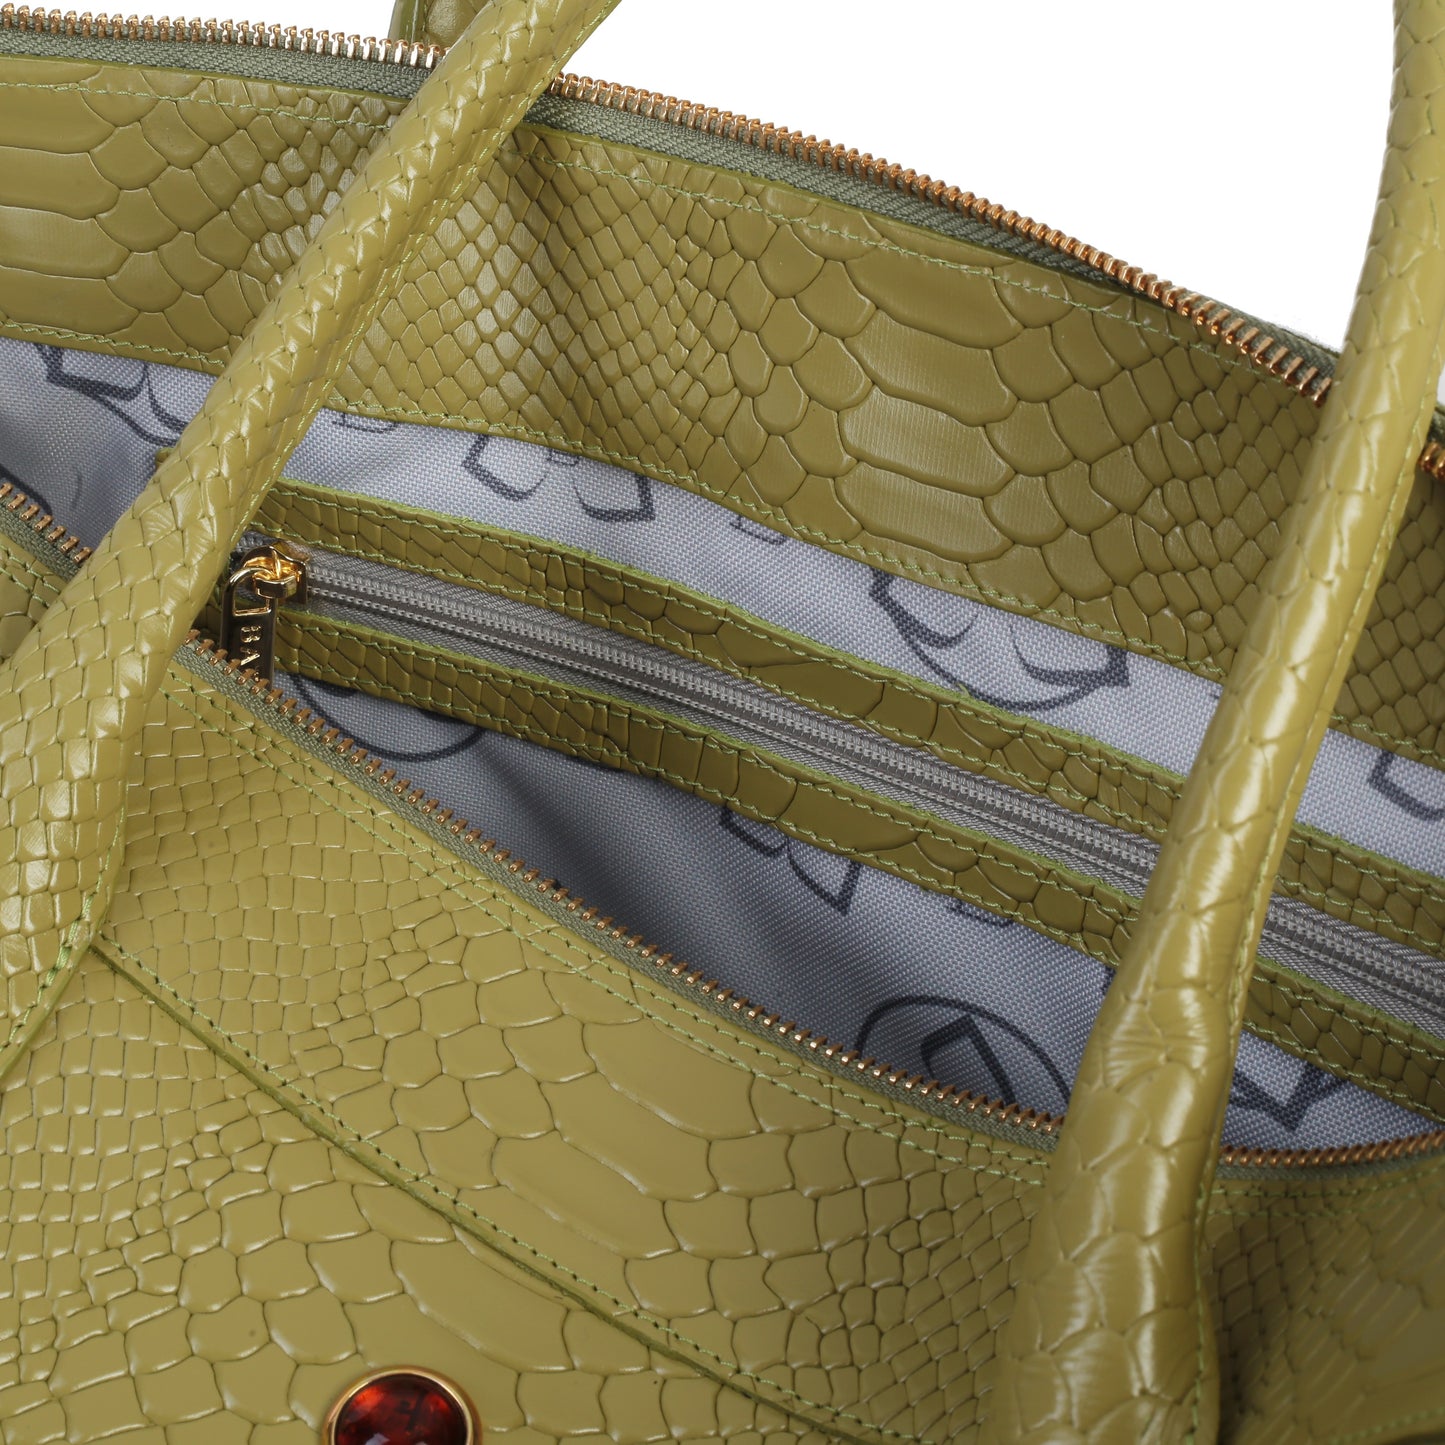 JADE OLIVE women's leather handbag